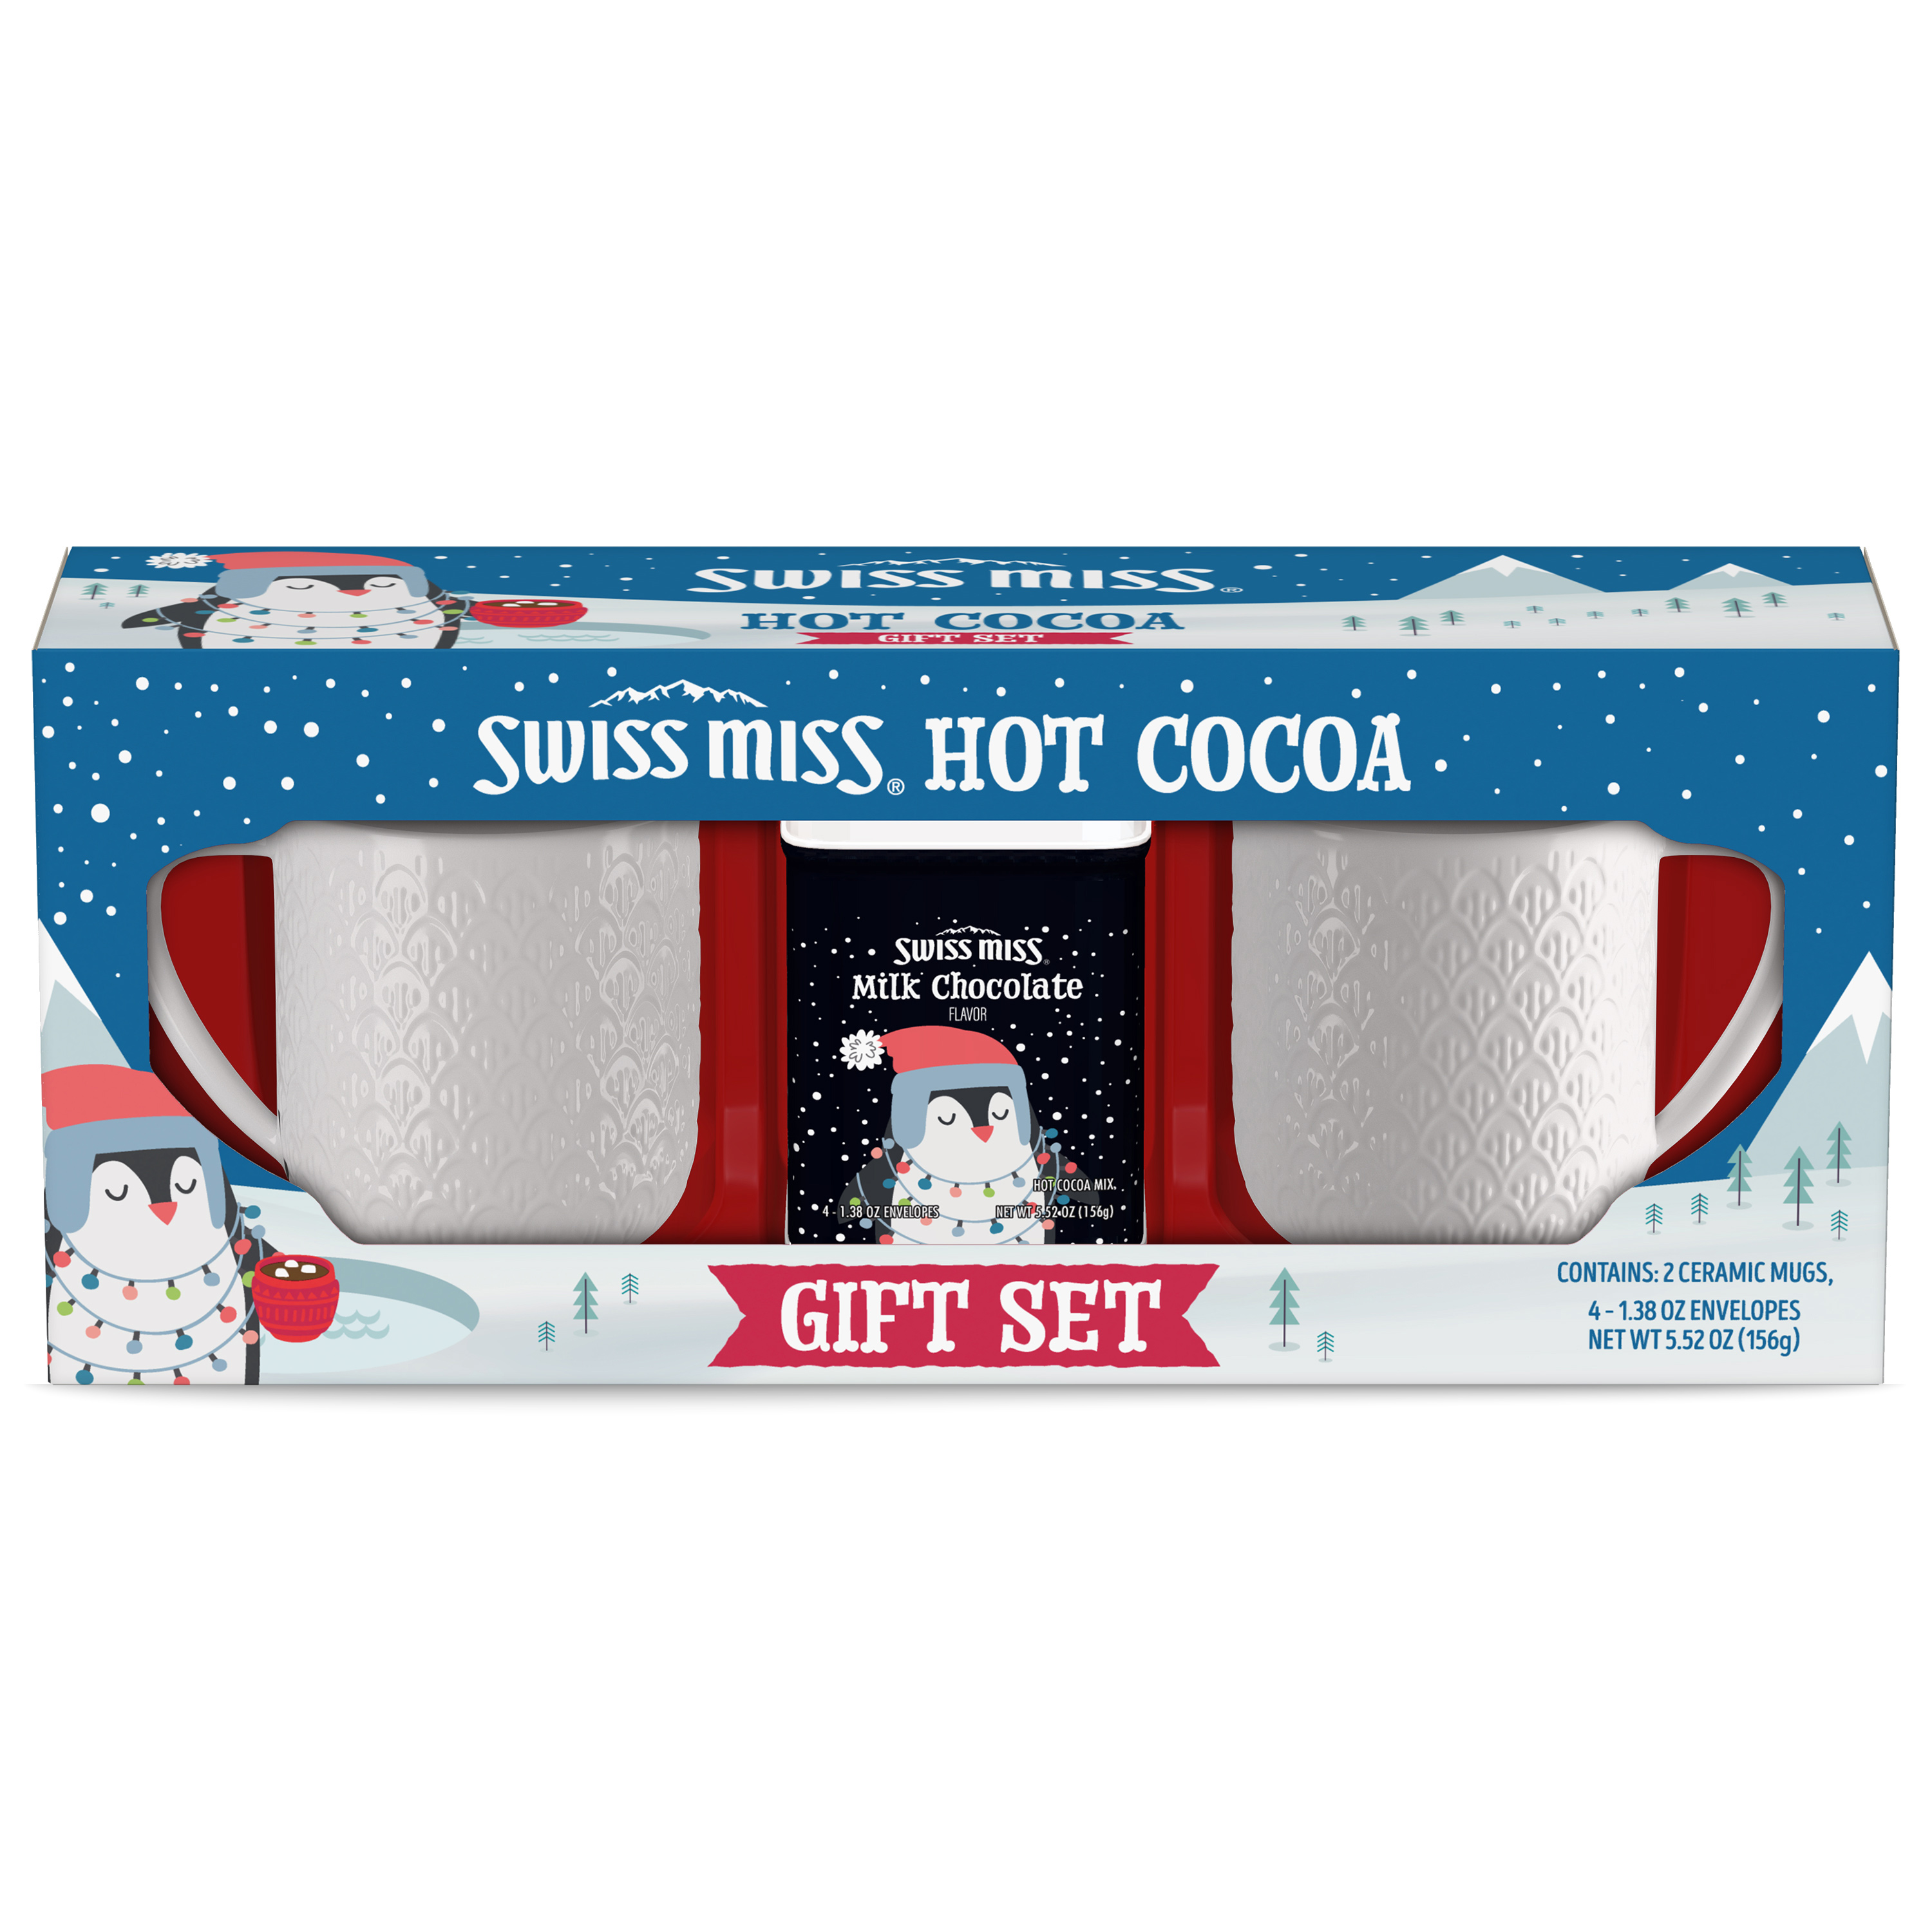 Swiss Miss Hot Cocoa and Ceramic Mug Gift Set, 5.52 oz. - image 1 of 7